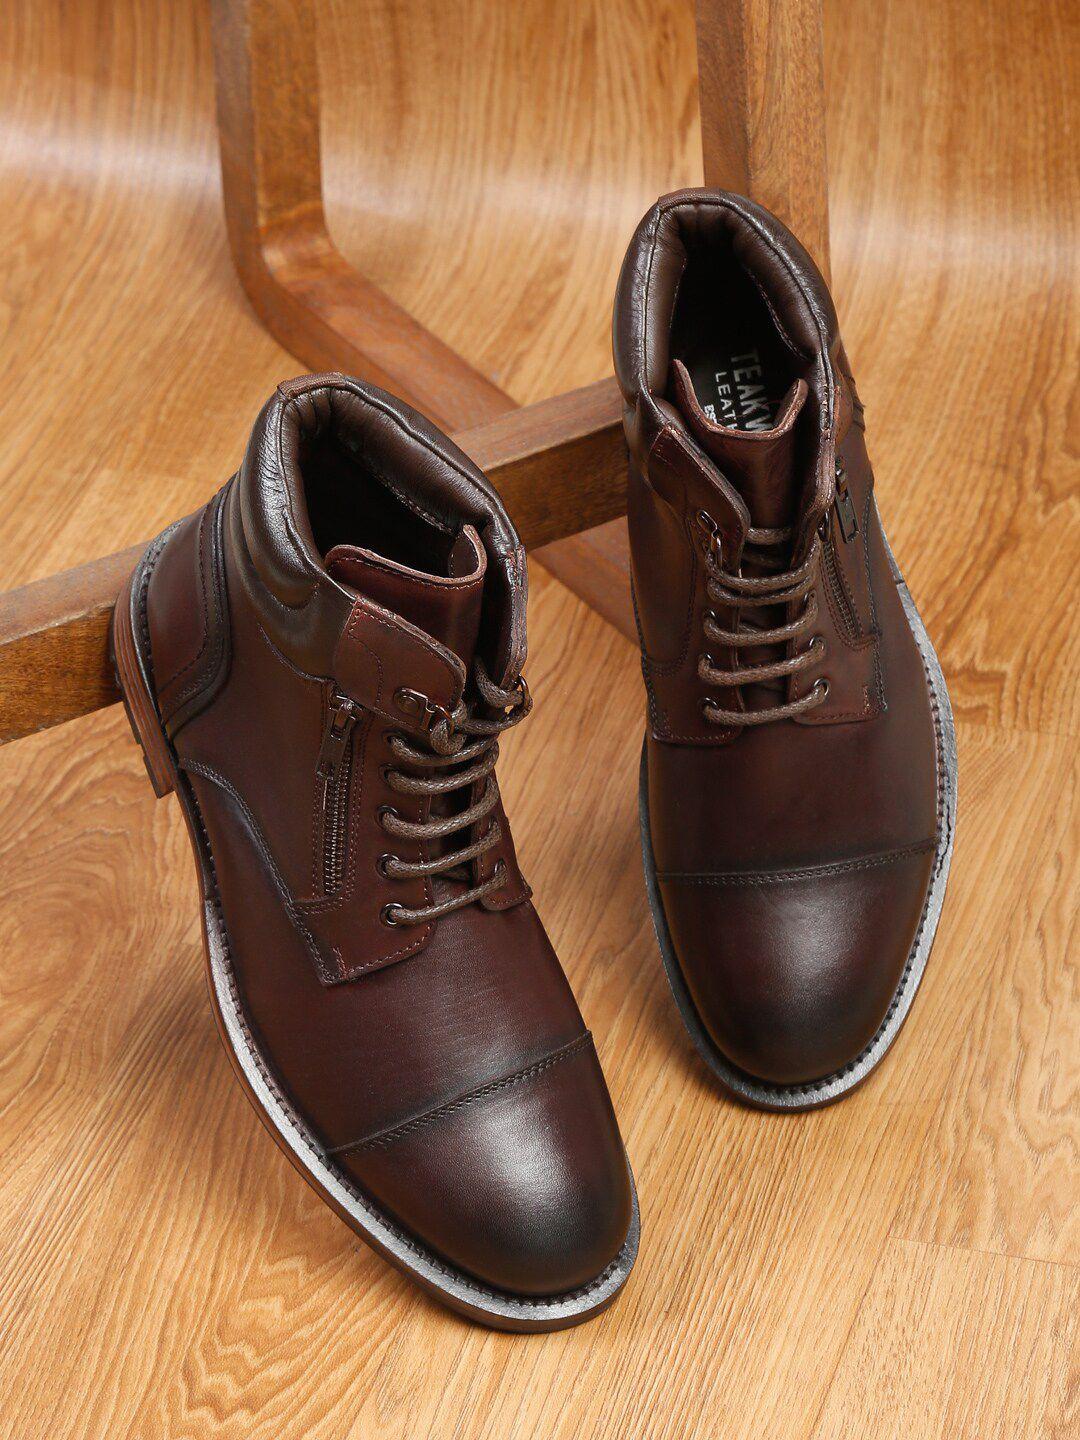 teakwood leathers men mid top block heel leather boots